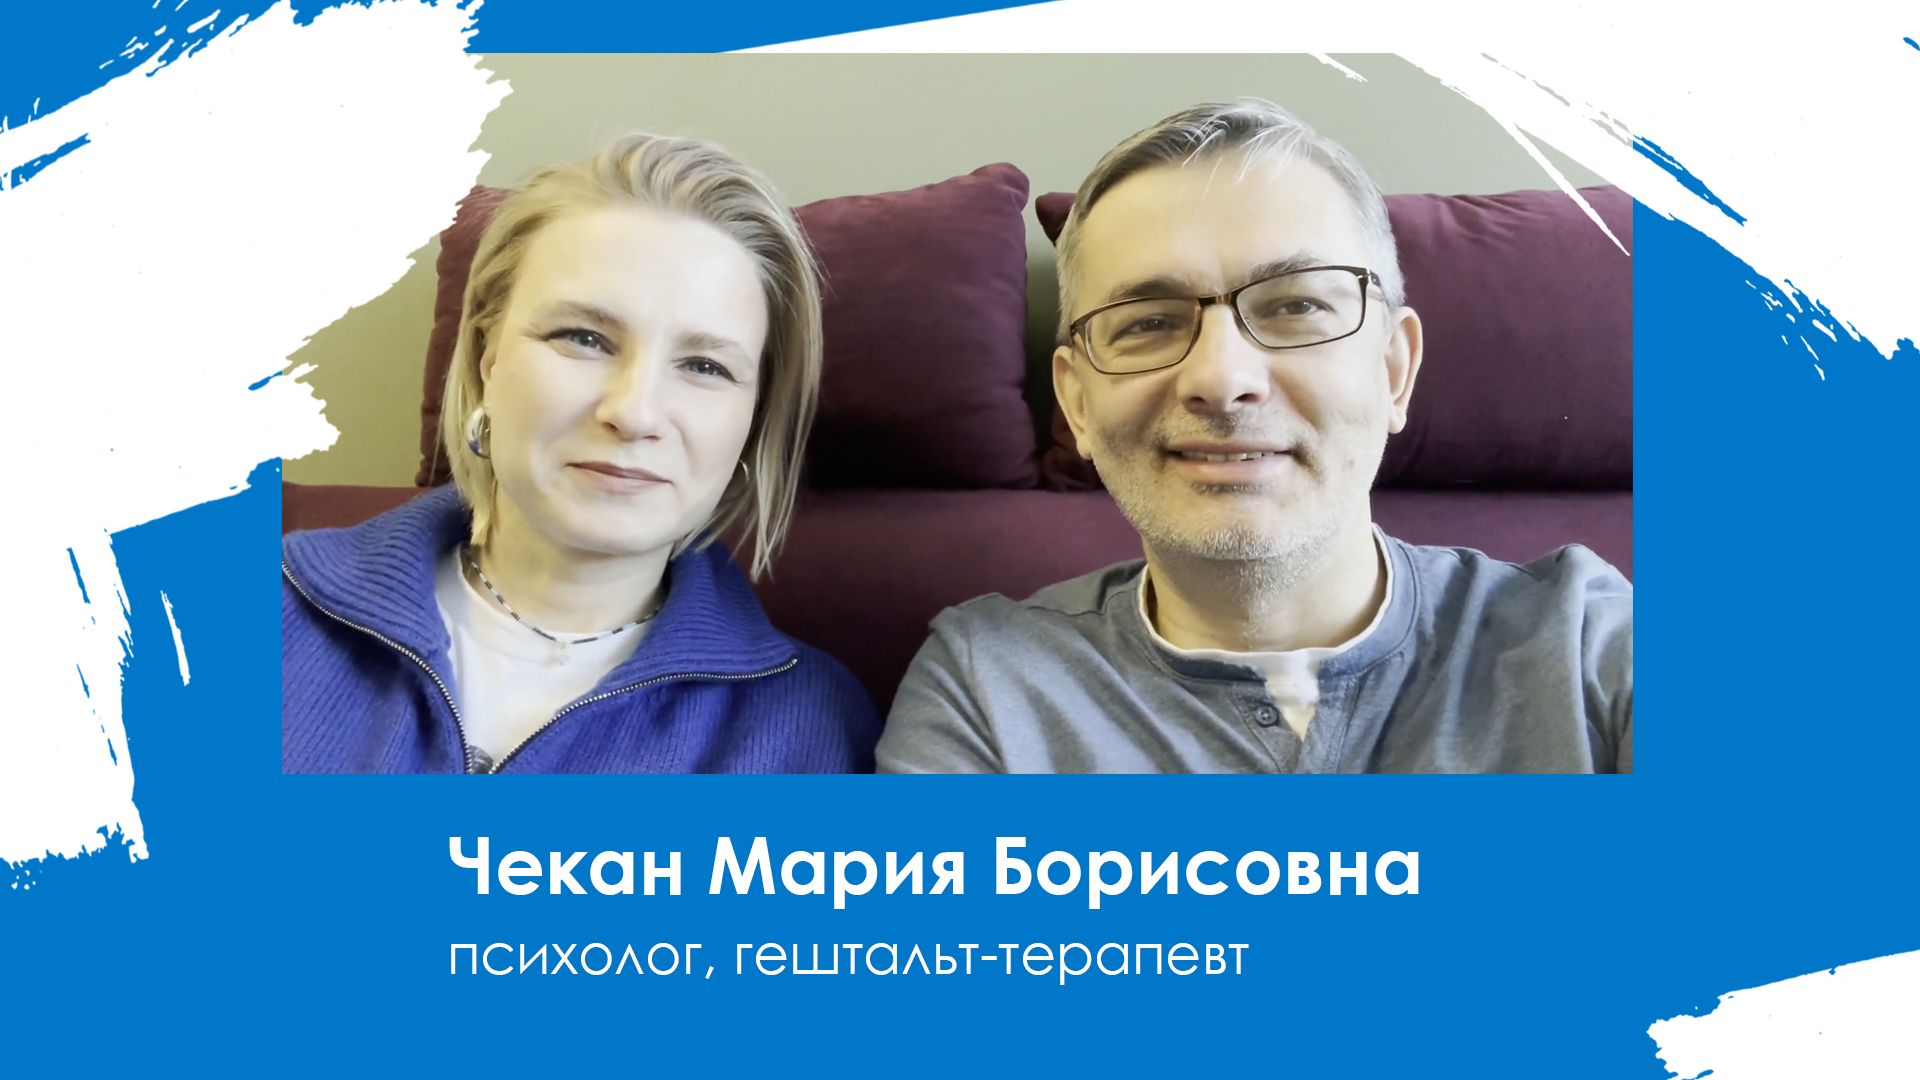 Чекан Мария Борисовна - психолог, гештальт-терапевт